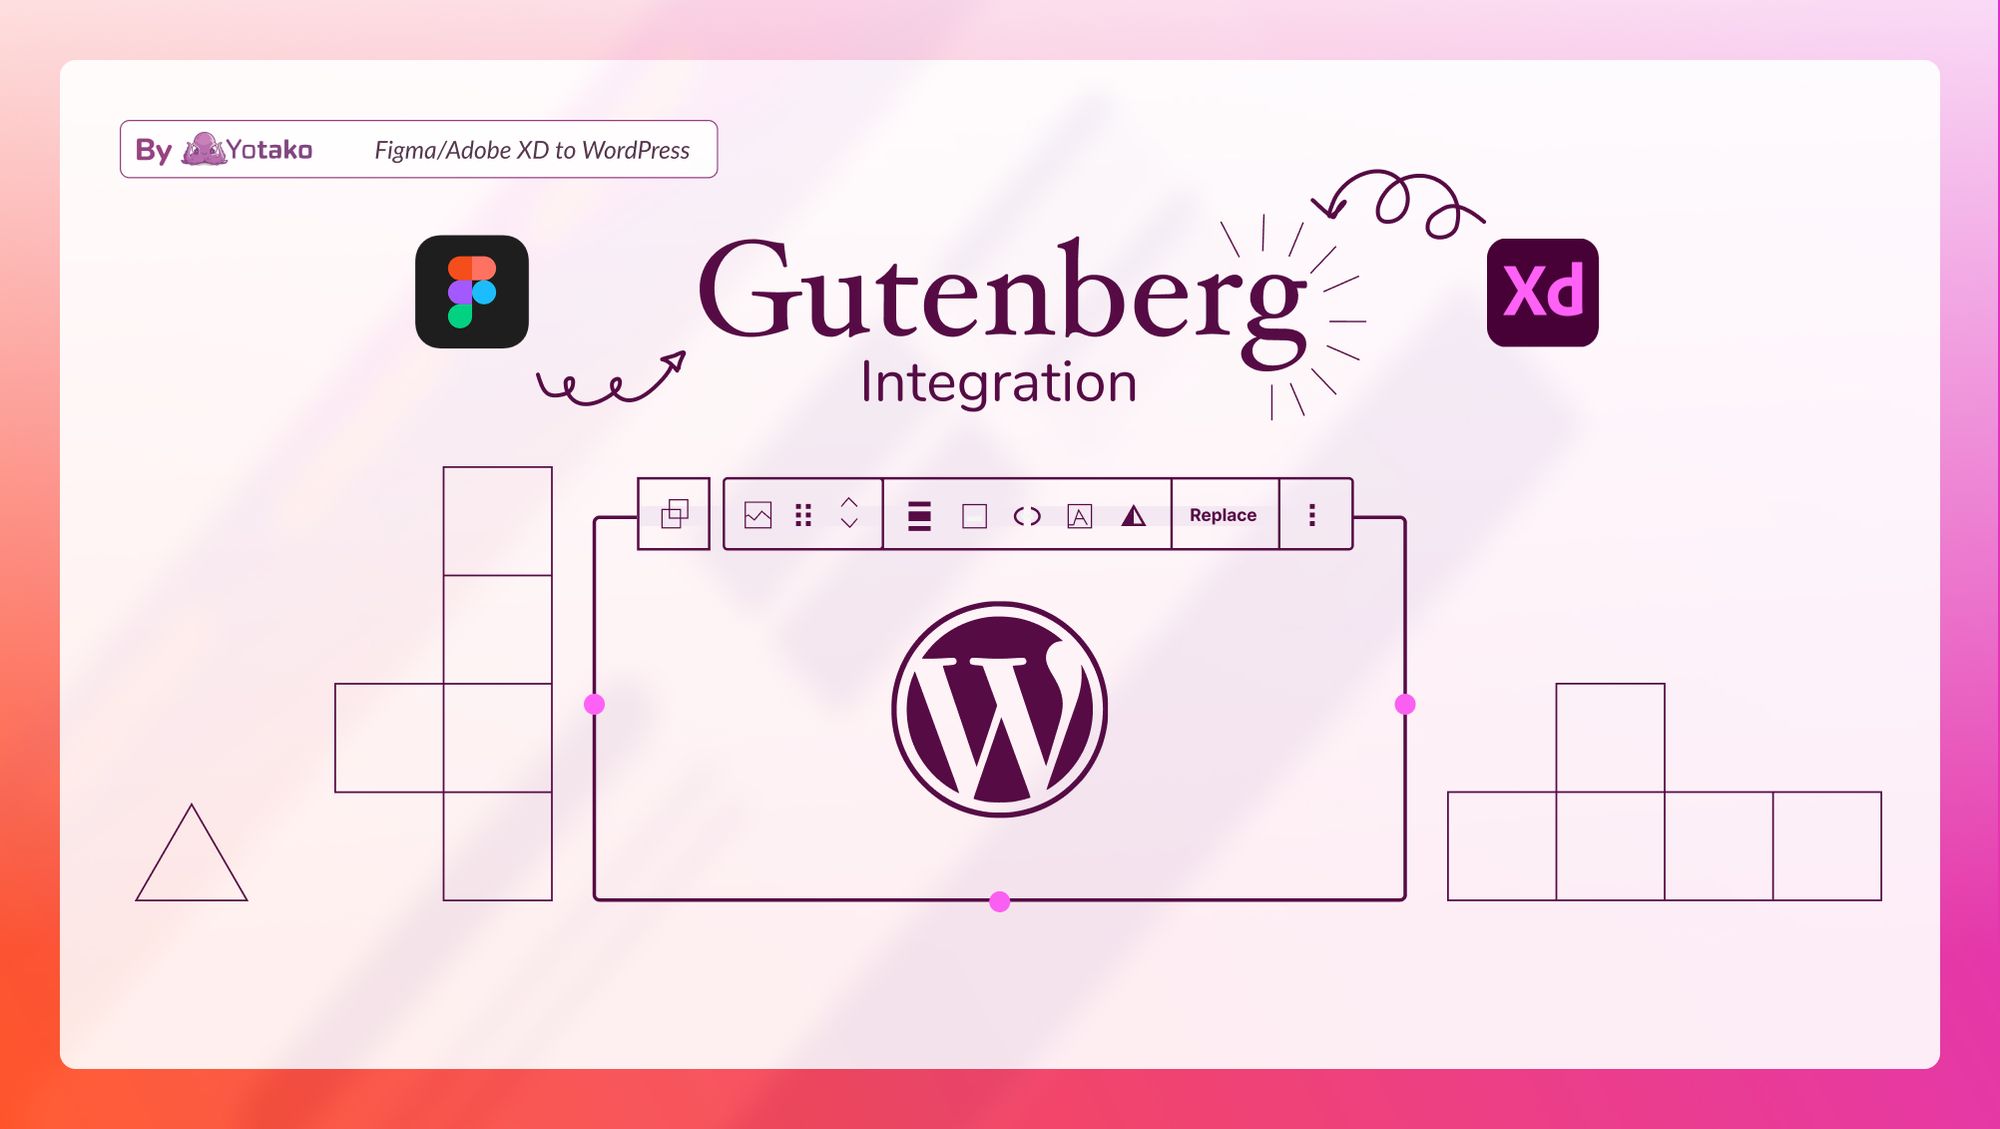 NEW RELEASE - Edit your Figma & Adobe XD designs as WordPress Gutenberg blocks